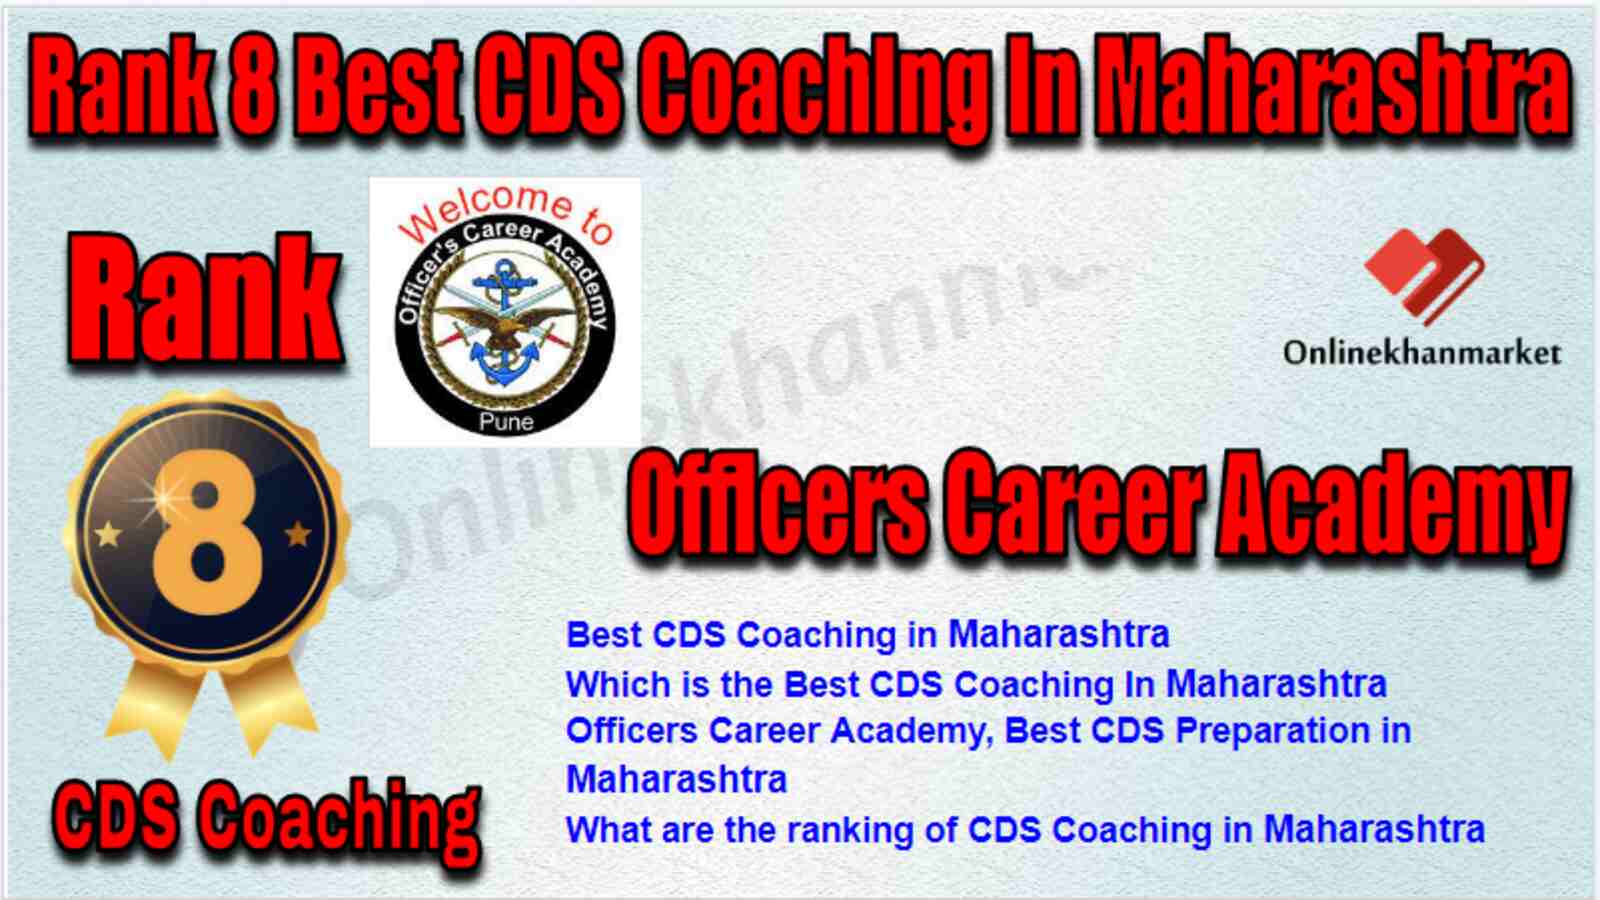 Rank 8 Best CDS Coaching in Maharashtra